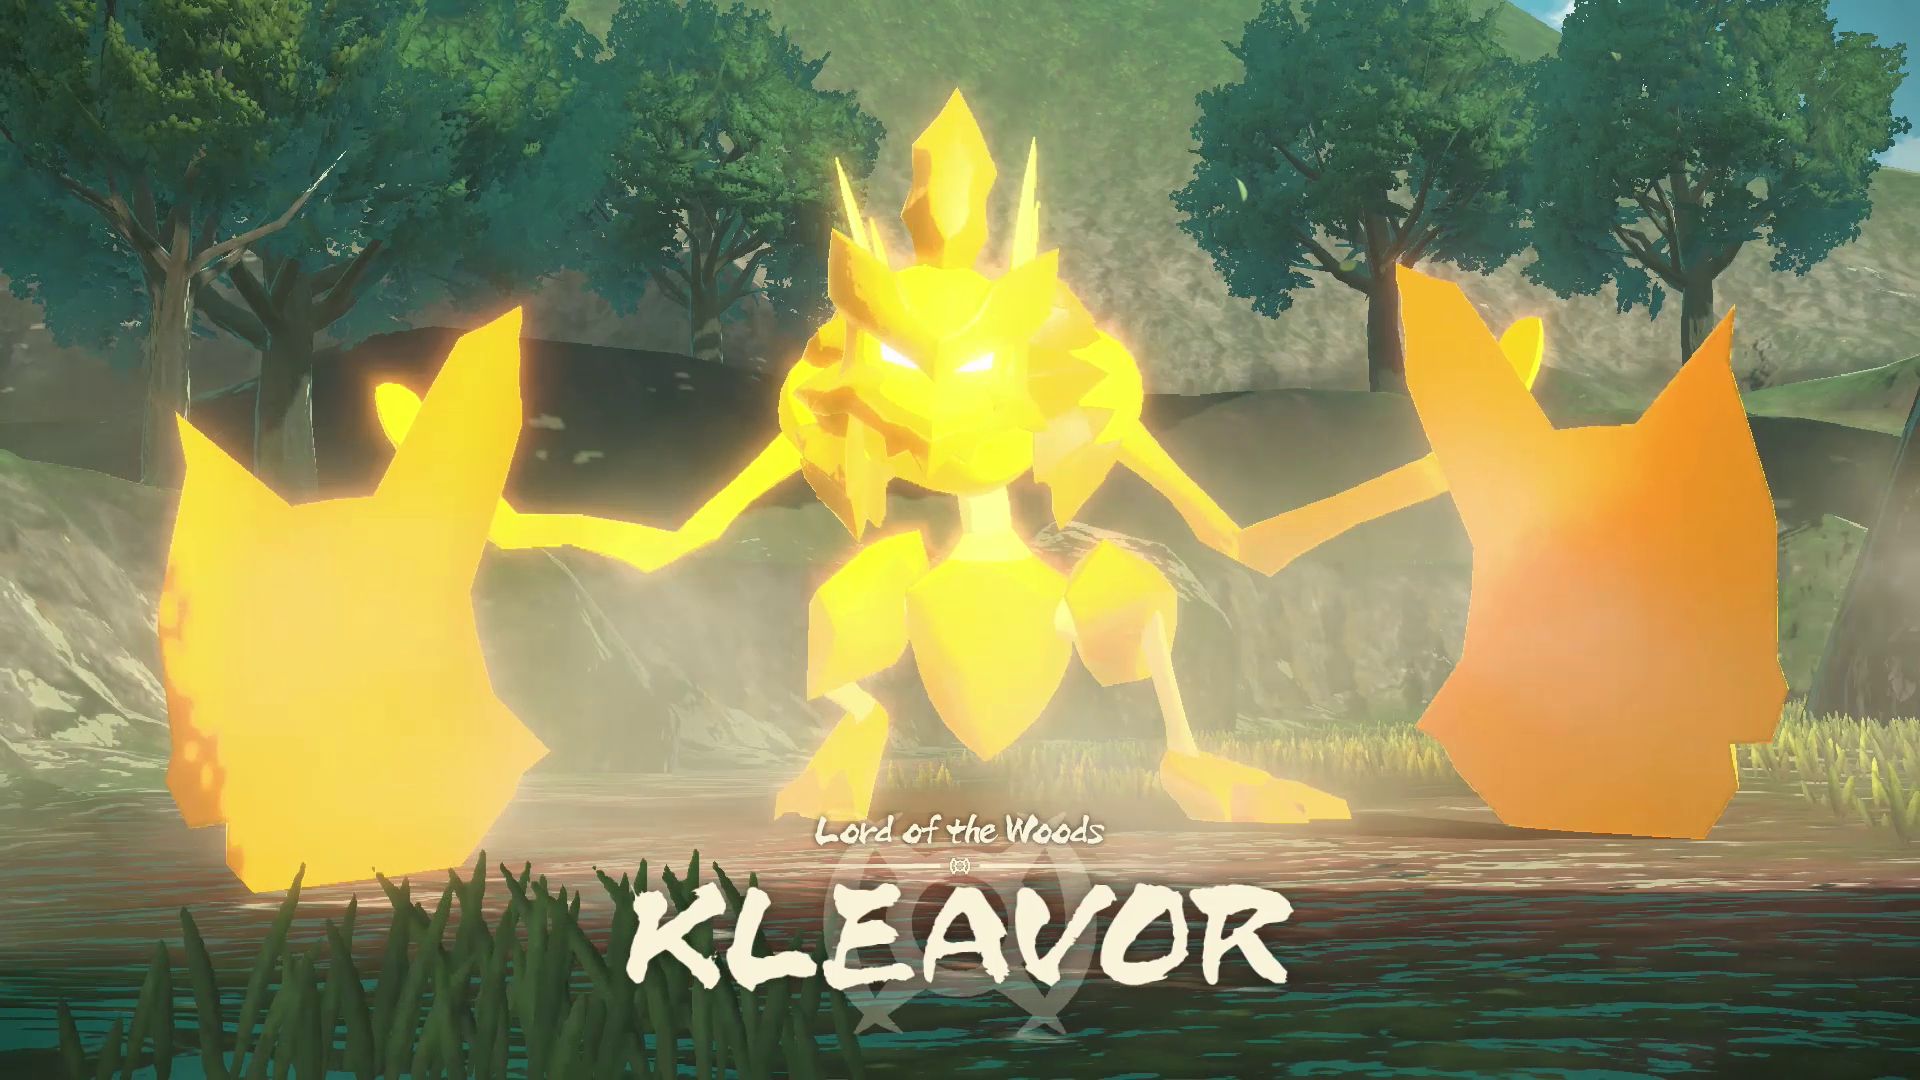 PLDH on X: The Pokémon Legends: Arceus key artwork has been